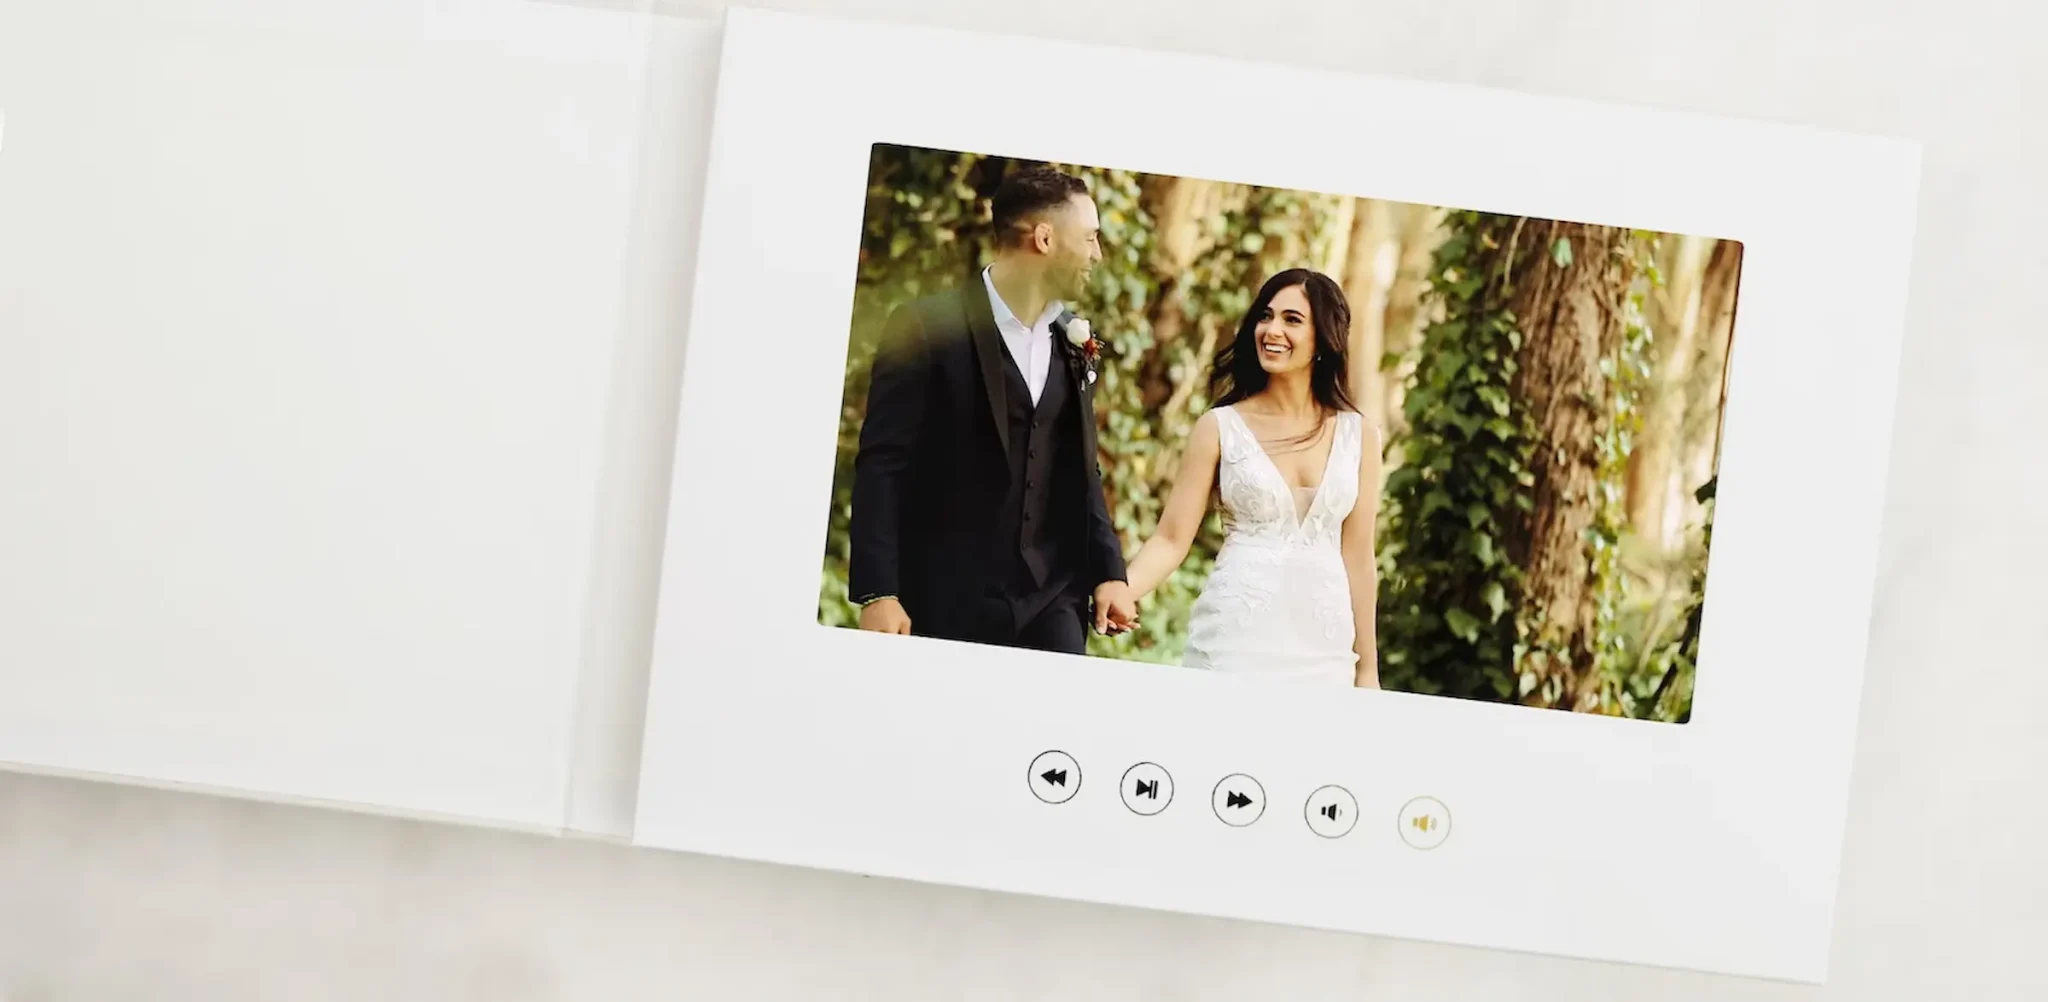 Our Wedding Video Book Digital Video Frame